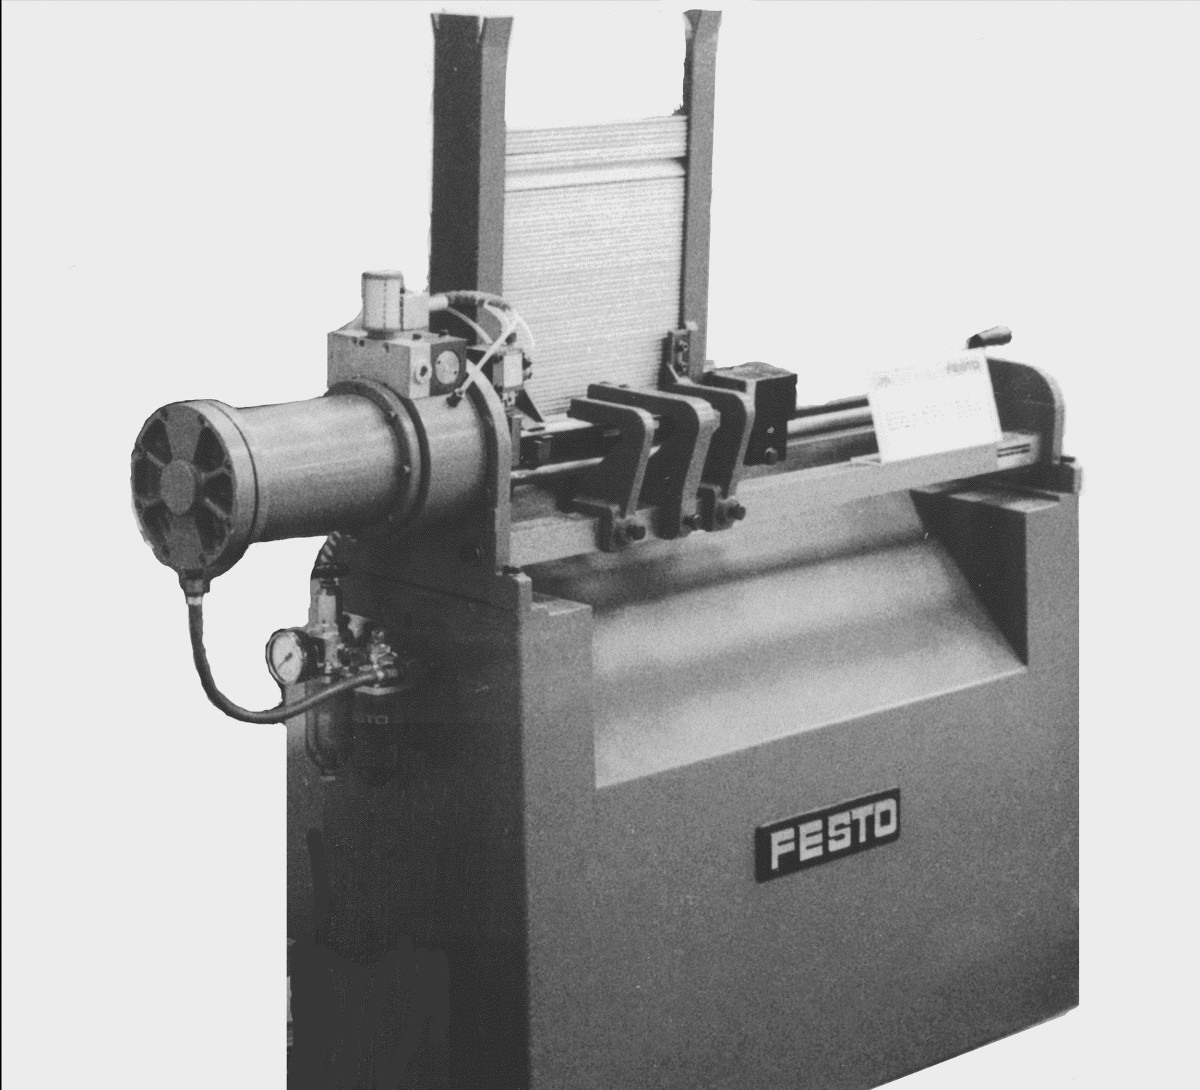 Original FESTO full base machine before I redesigned it